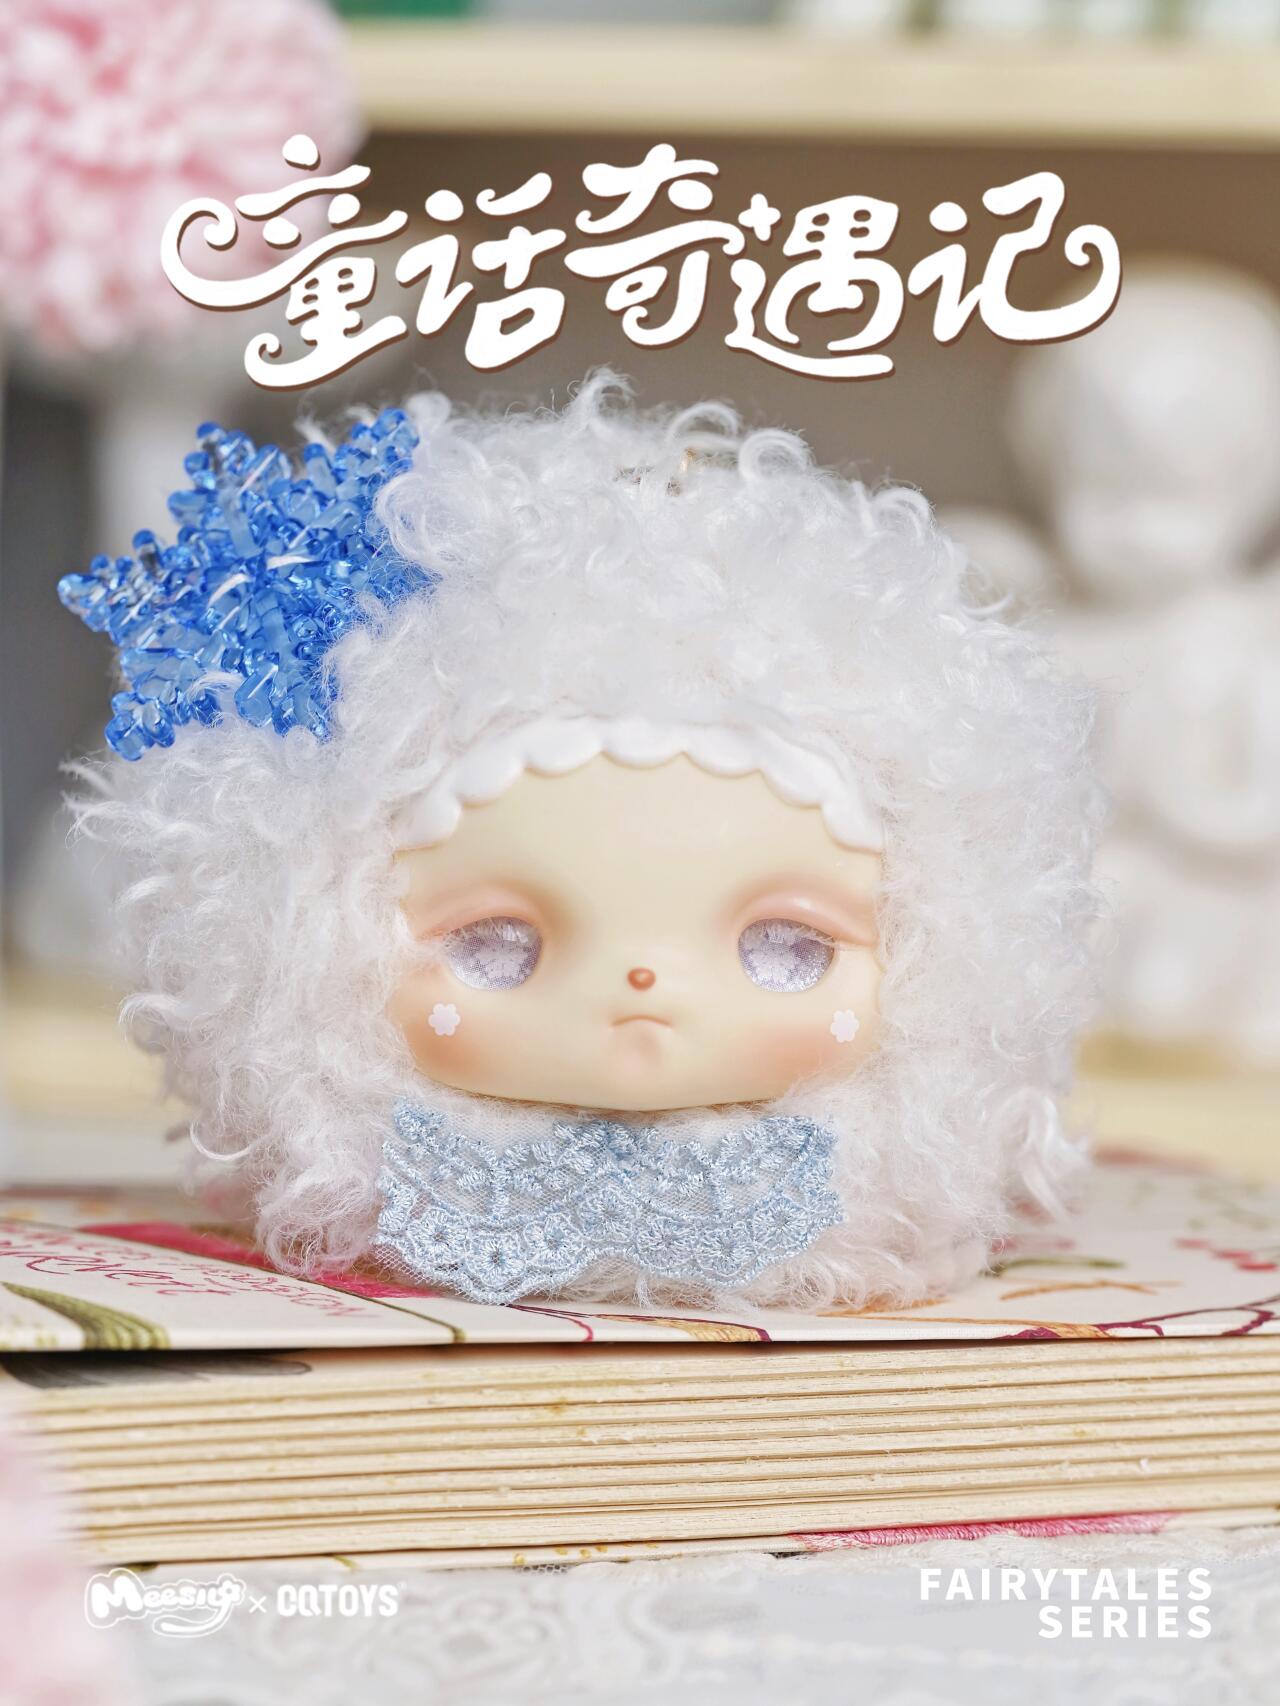 【Sale】Meesiy Fairytale Series Plush Blind Box